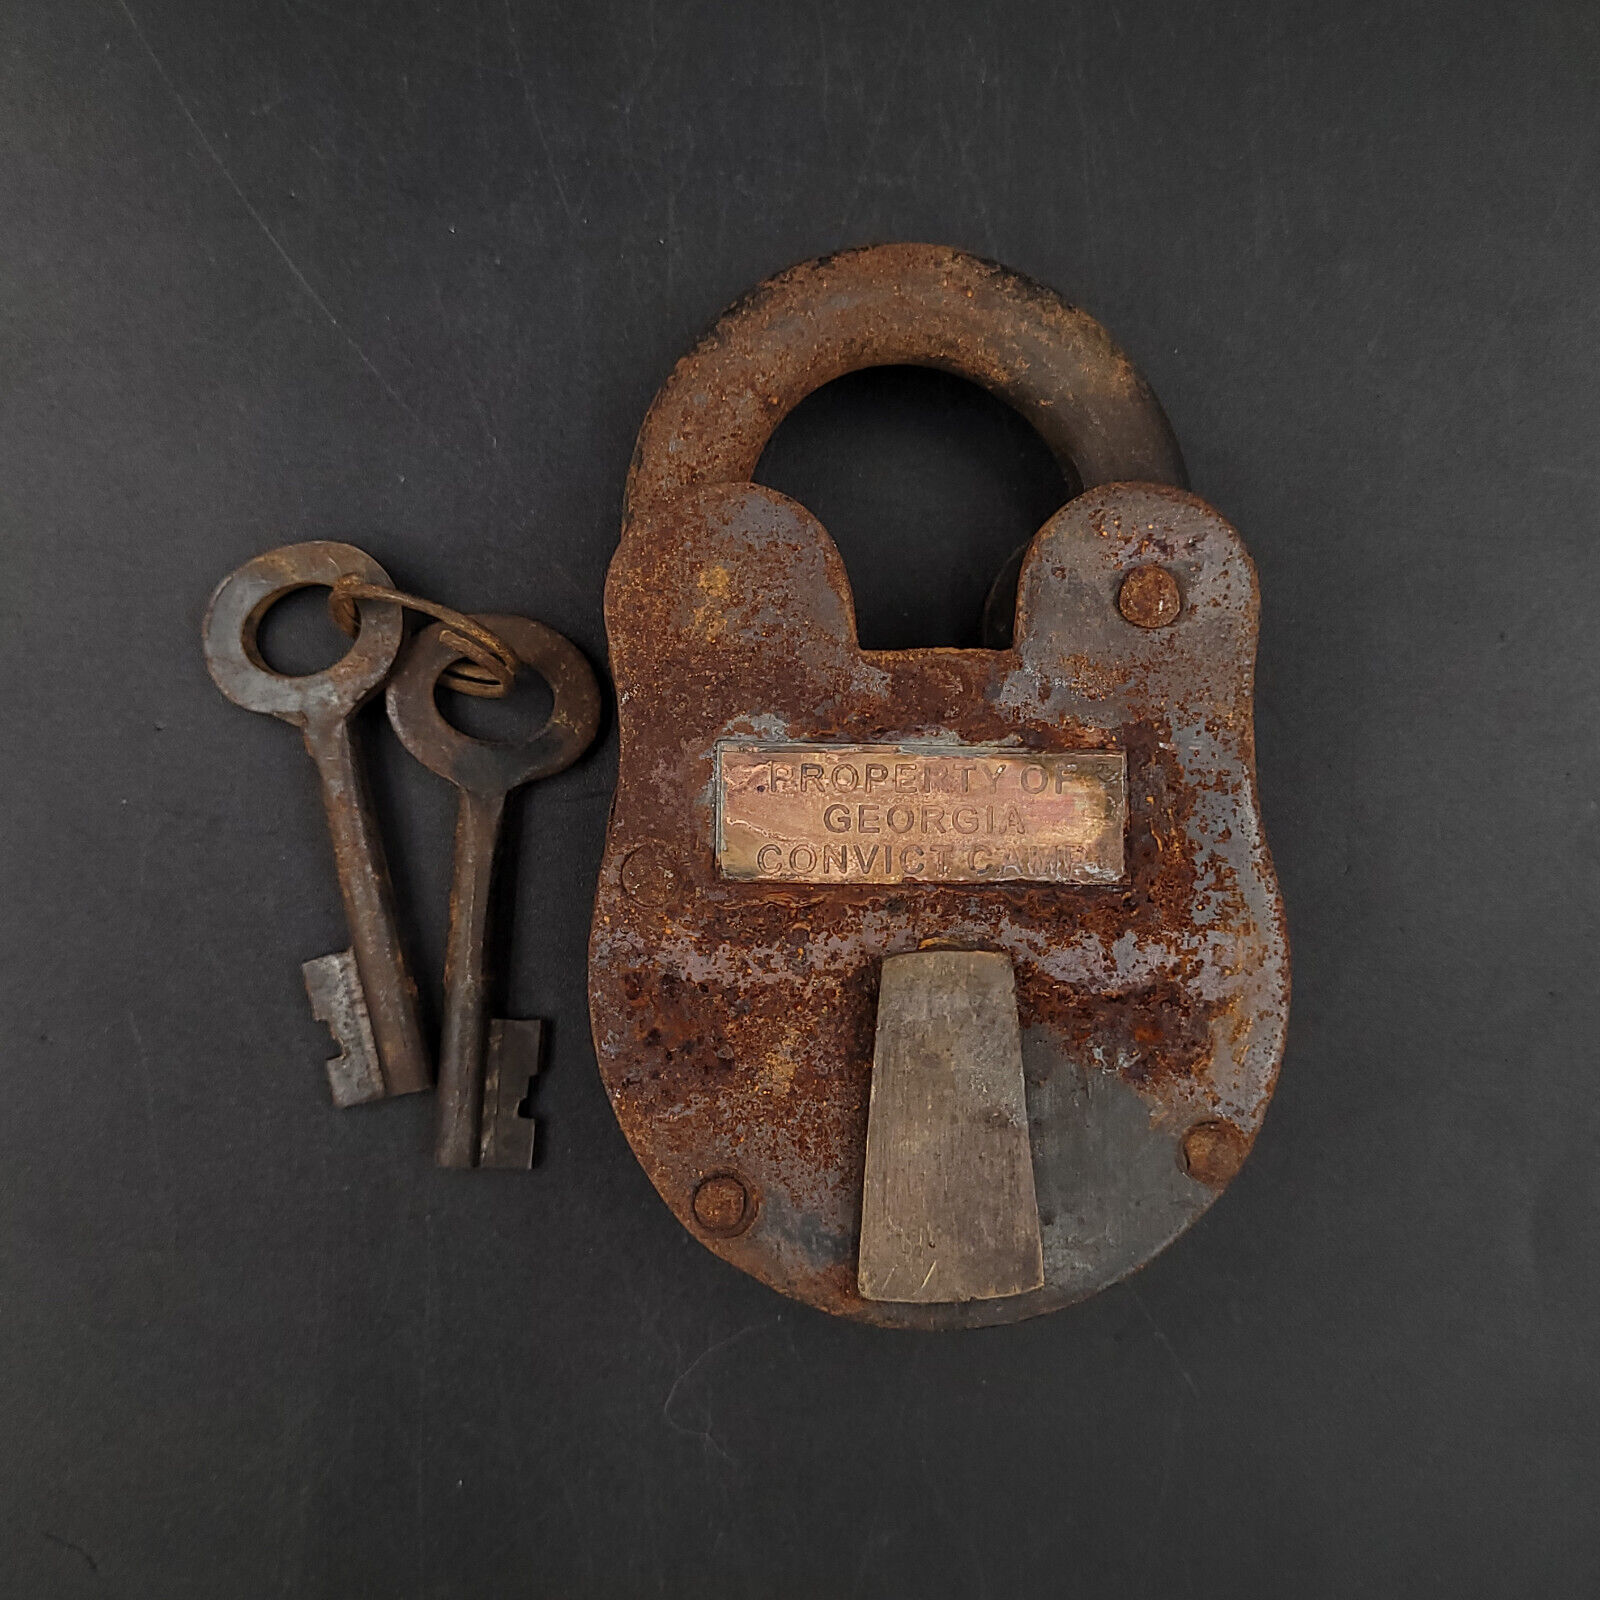 Property of Georgia Convict Camp Prison Padlock w/ Working Keys